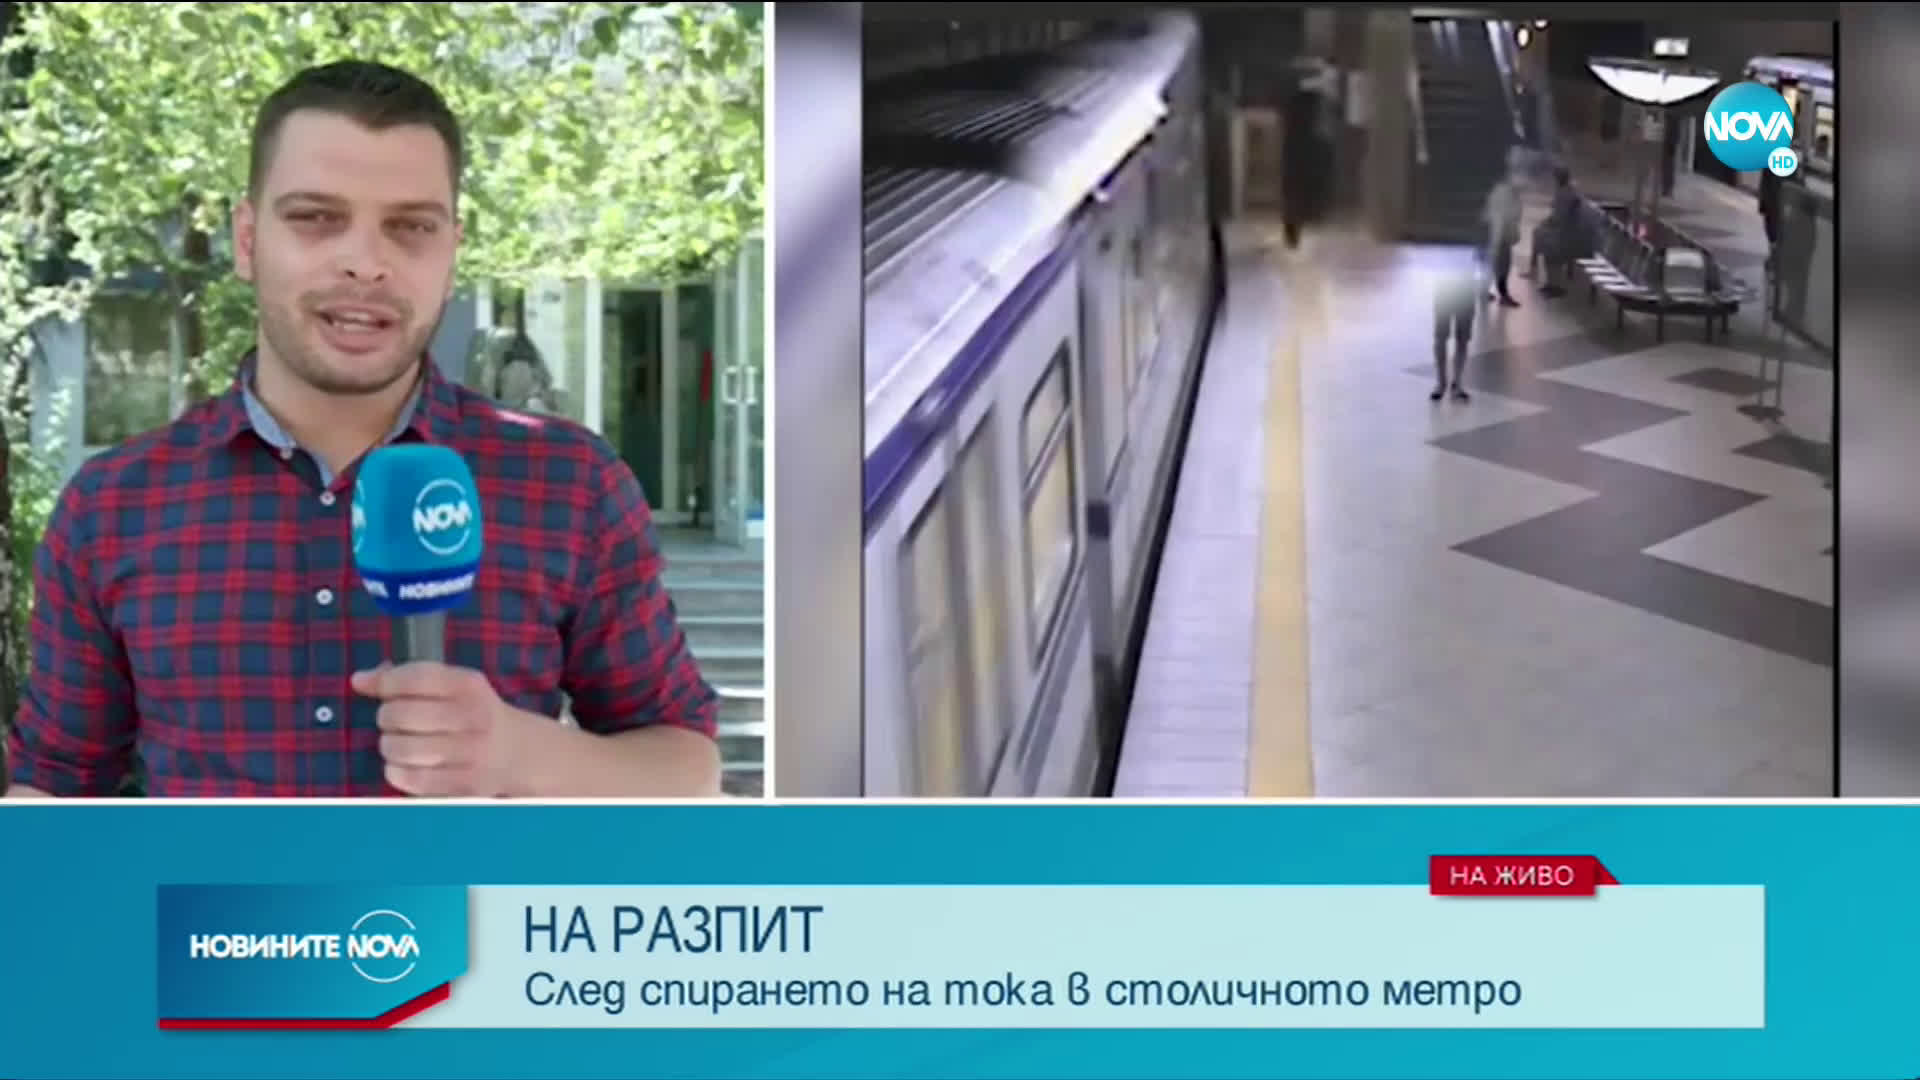 Повдигнаха обвинение и на Еленко Божков заради случая с метрото